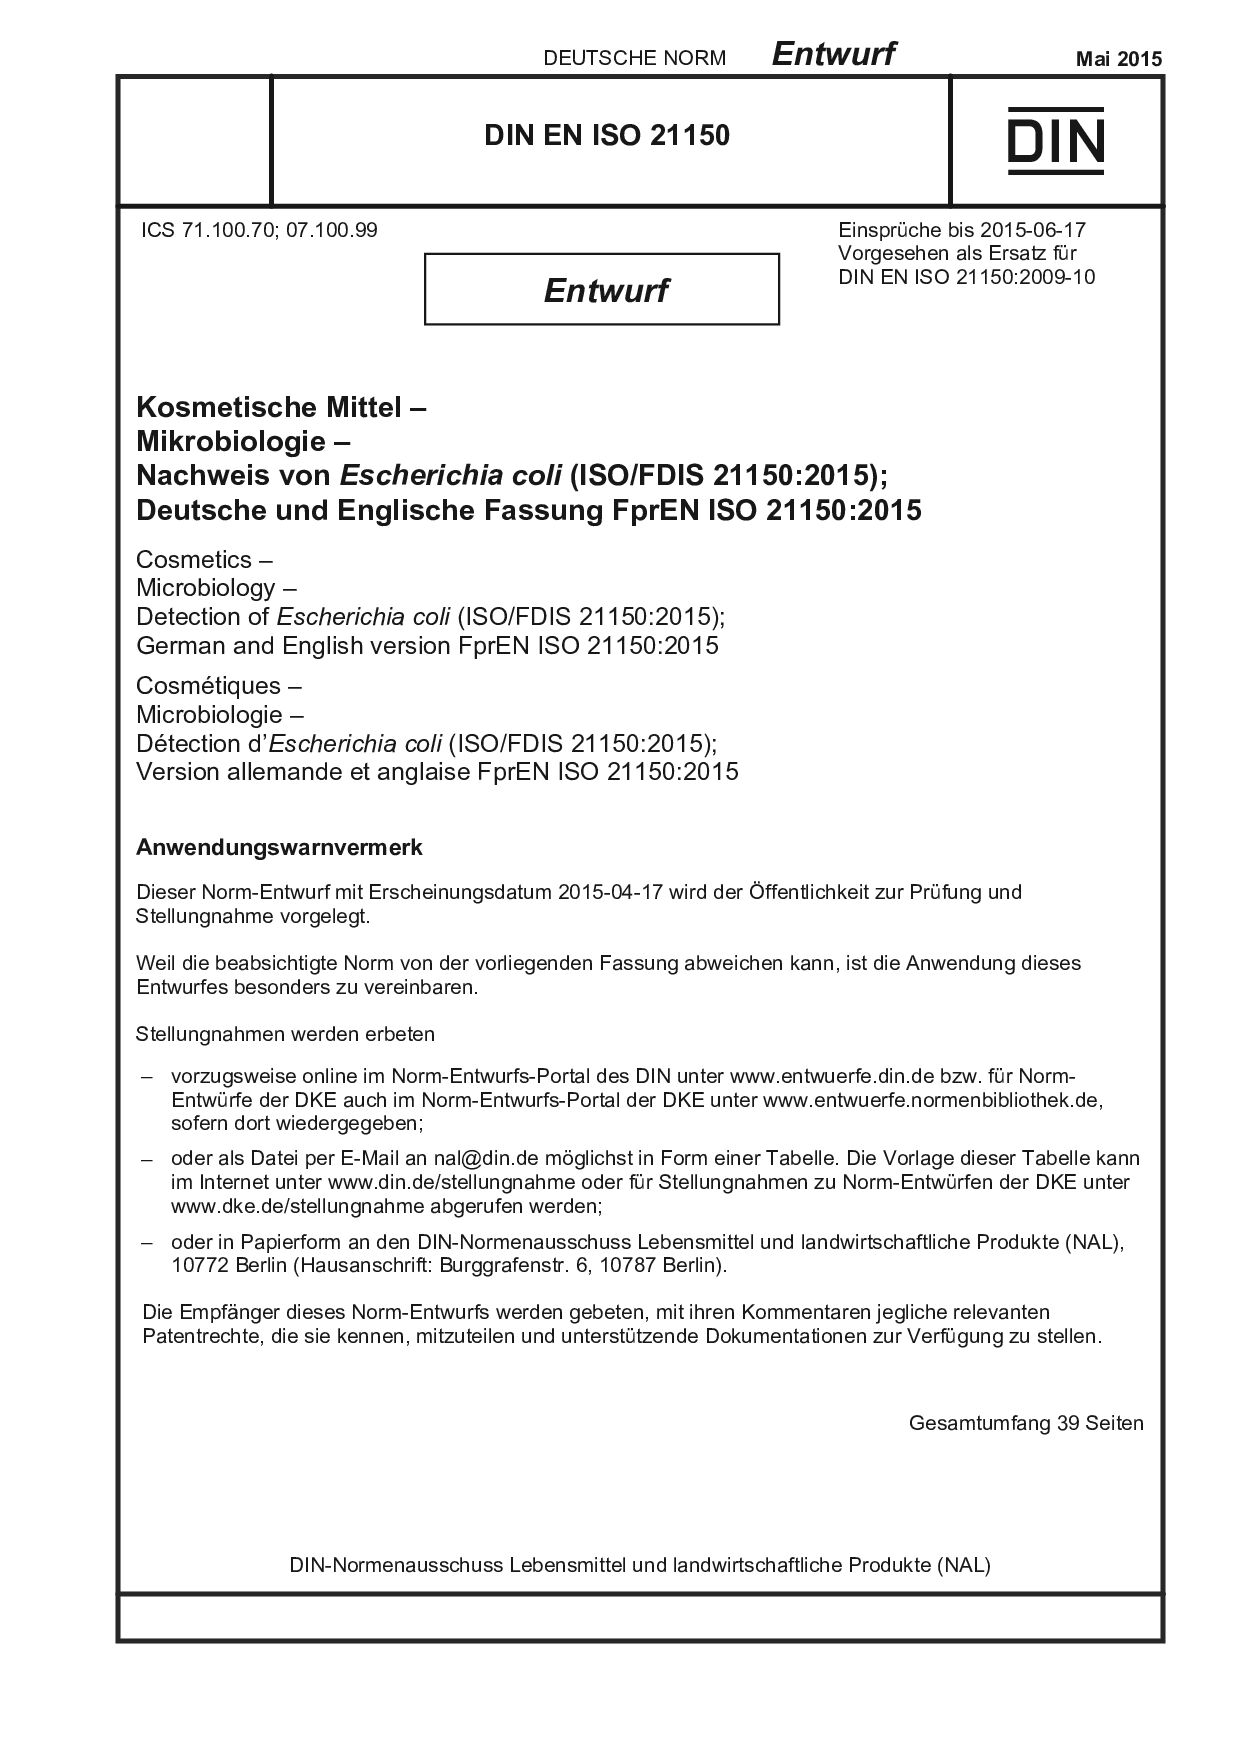 DIN EN ISO 21150 E:2015-05